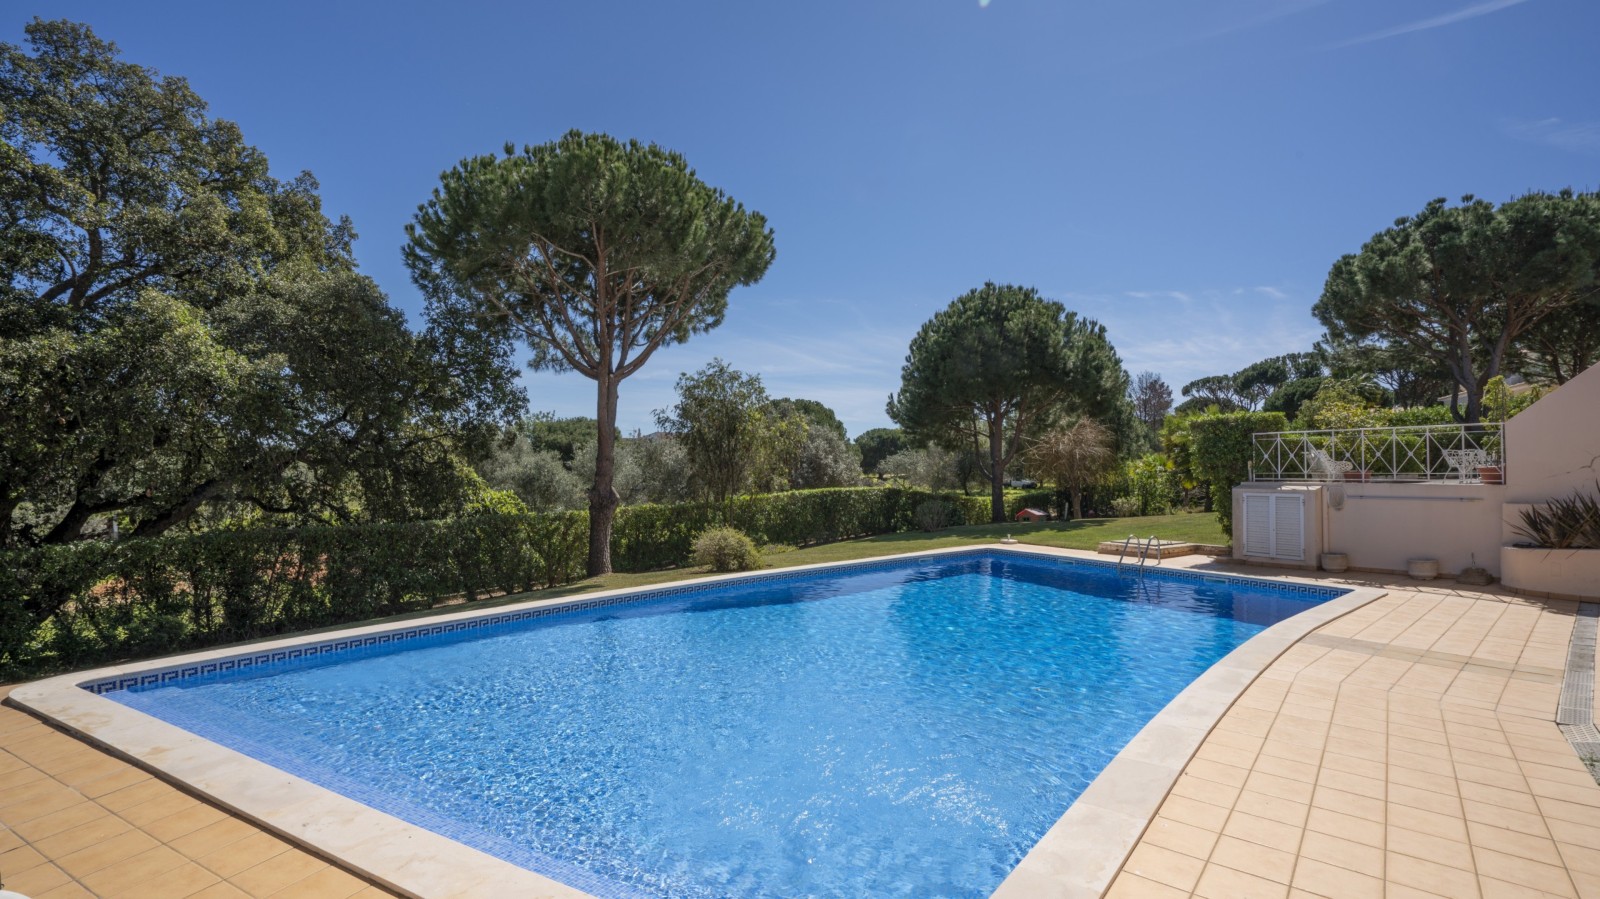 Moradia geminada V4, com piscina, para venda em Vilamoura, Algarve_237471